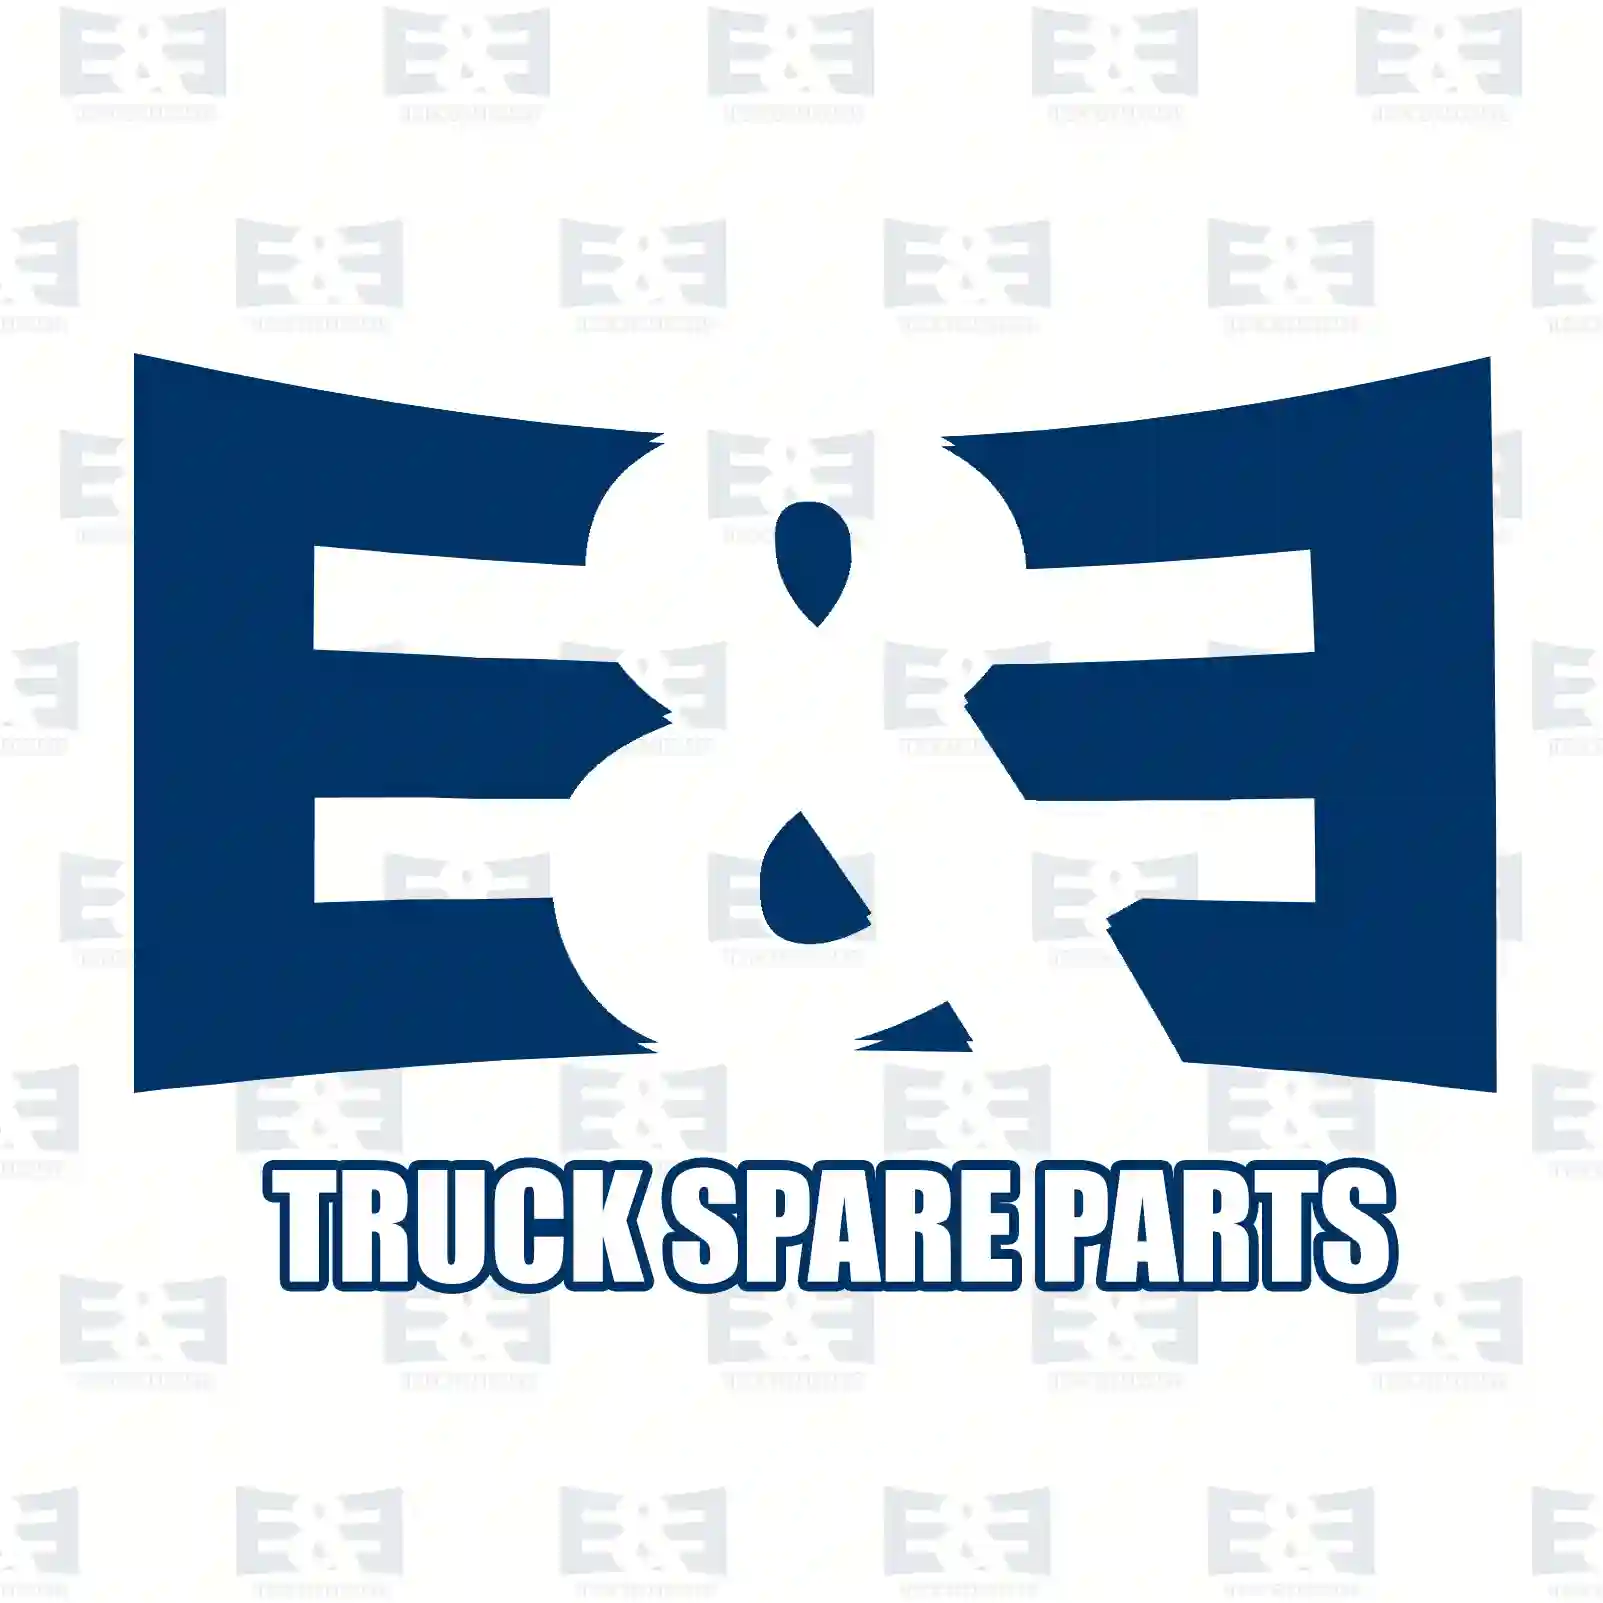  Stud coupling, oil filter || E&E Truck Spare Parts | Truck Spare Parts, Auotomotive Spare Parts